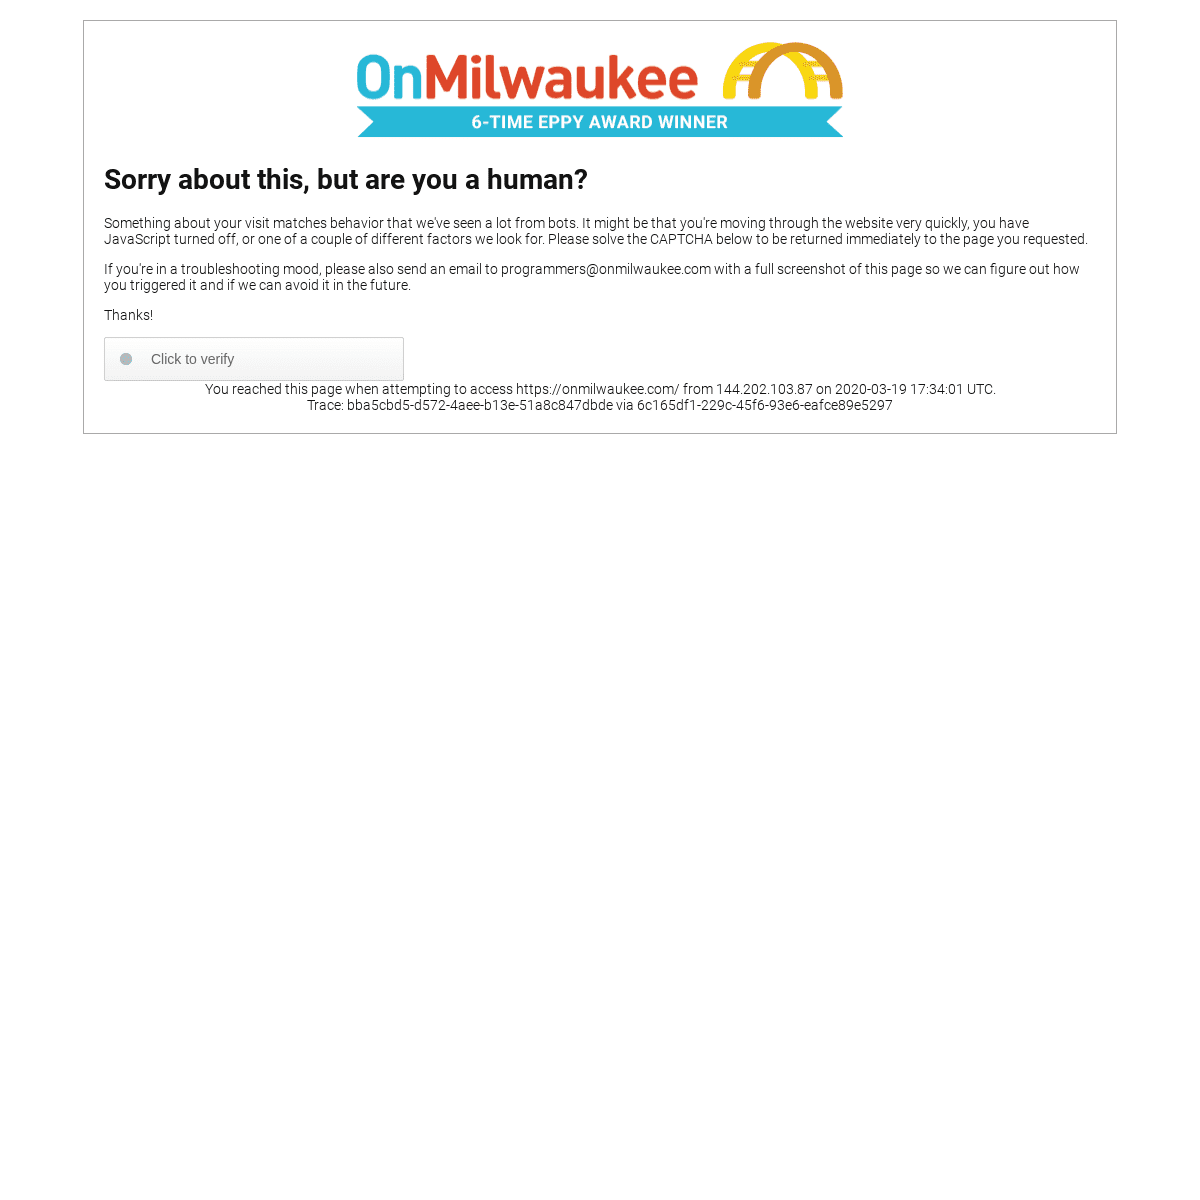 A complete backup of onmilwaukee.com